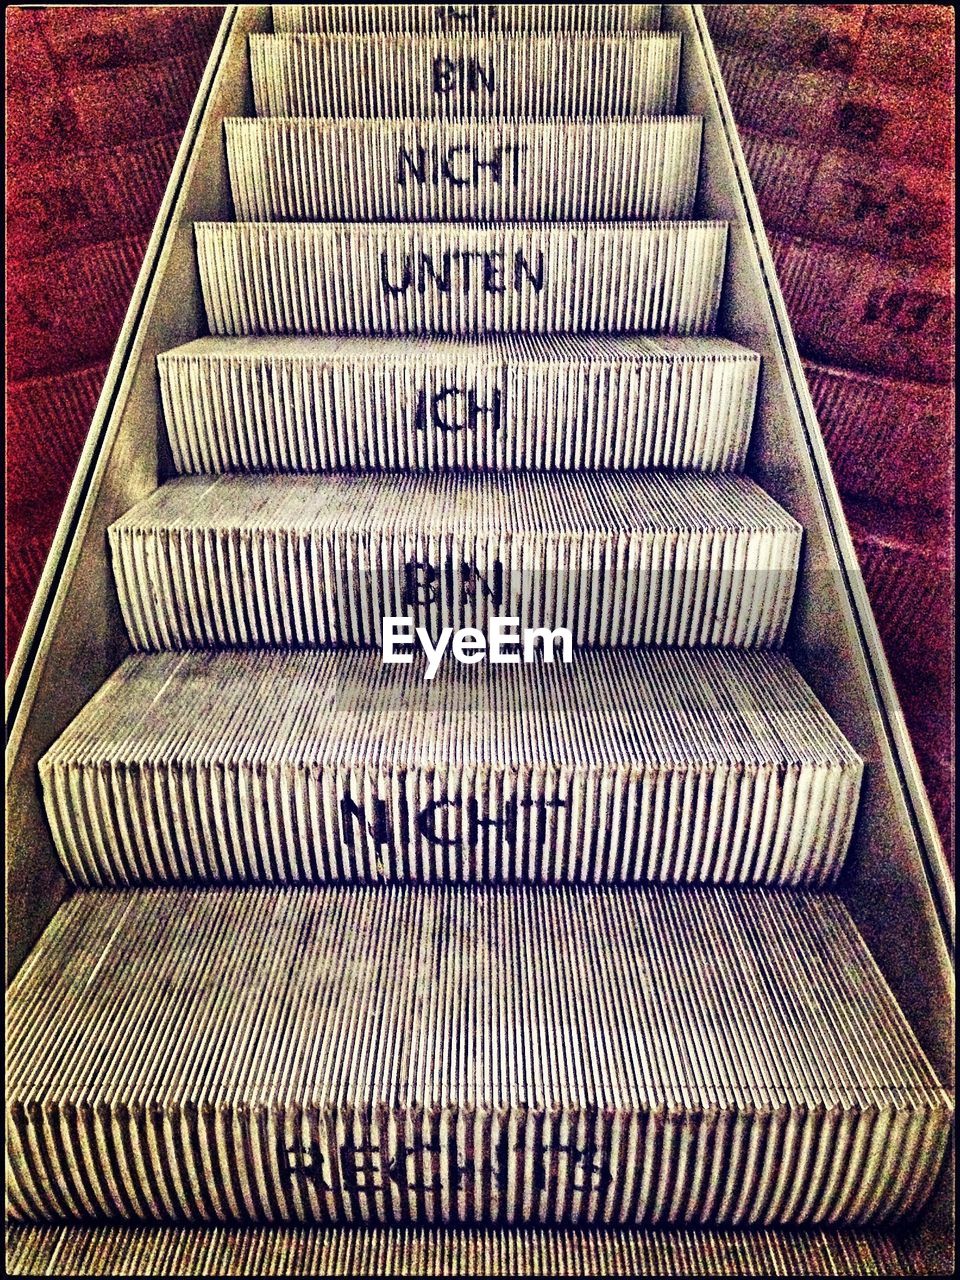 German text on steps of escalator